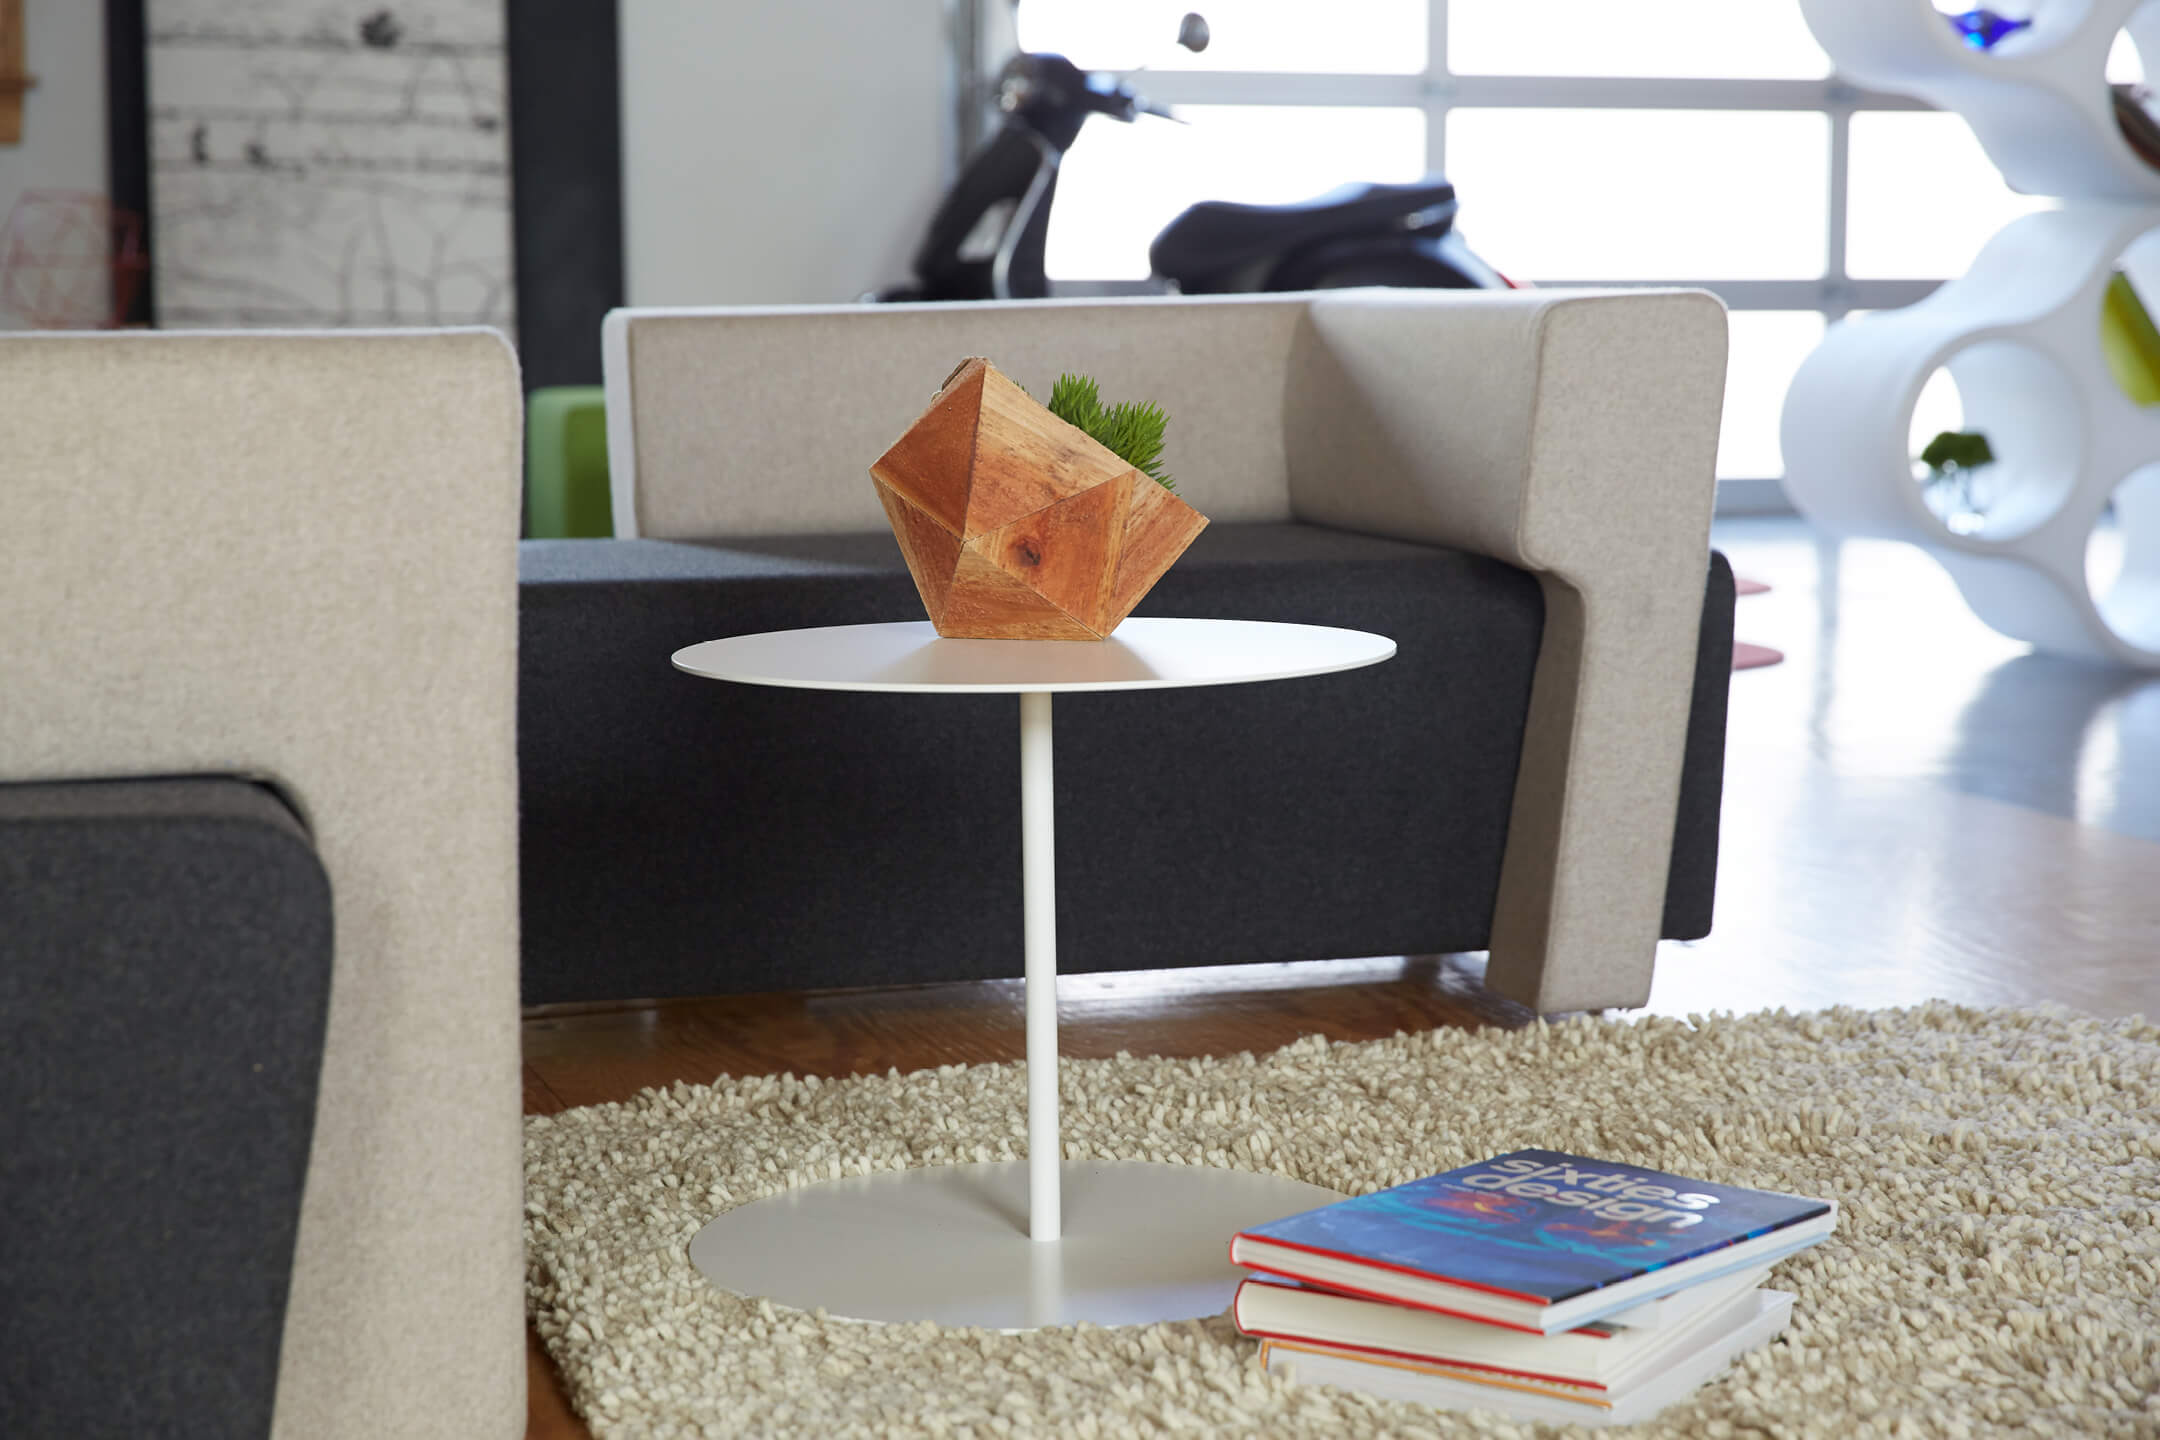 Haworth Giulio Cappellini Designers small round table near office couch